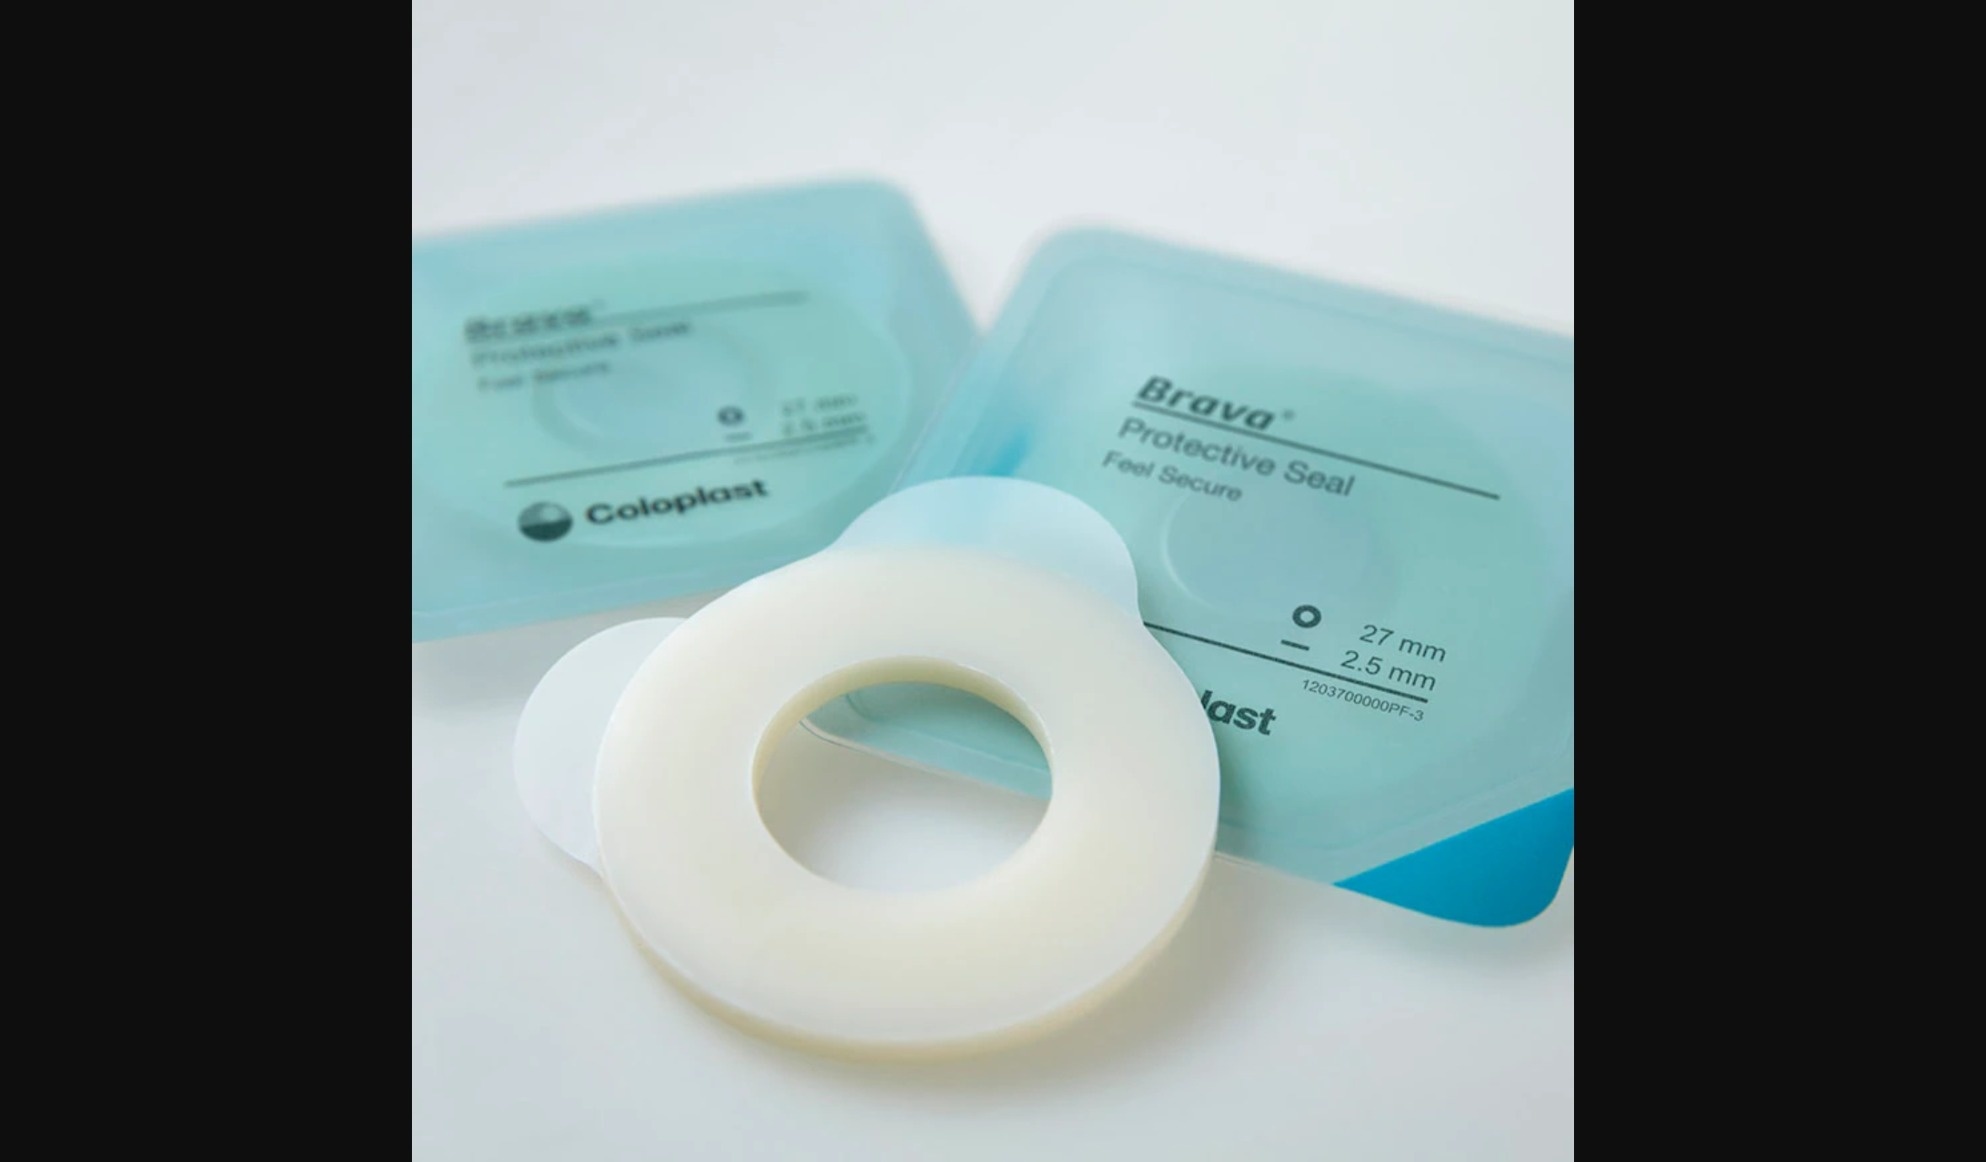 Brava® Protective Seal - Med Supplies